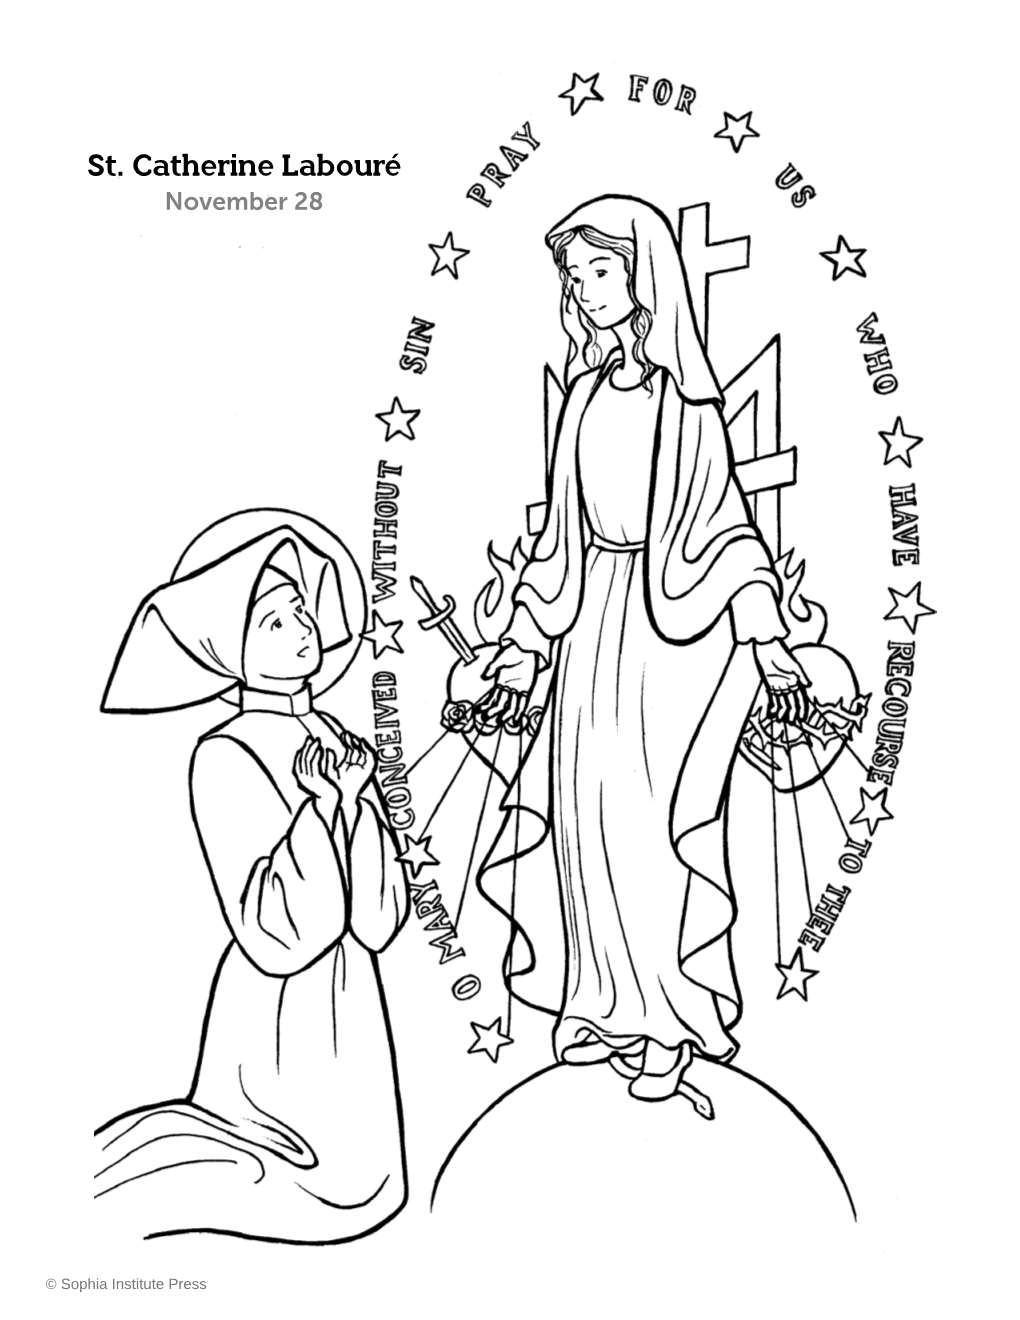 St. Catherine Labouré November 28